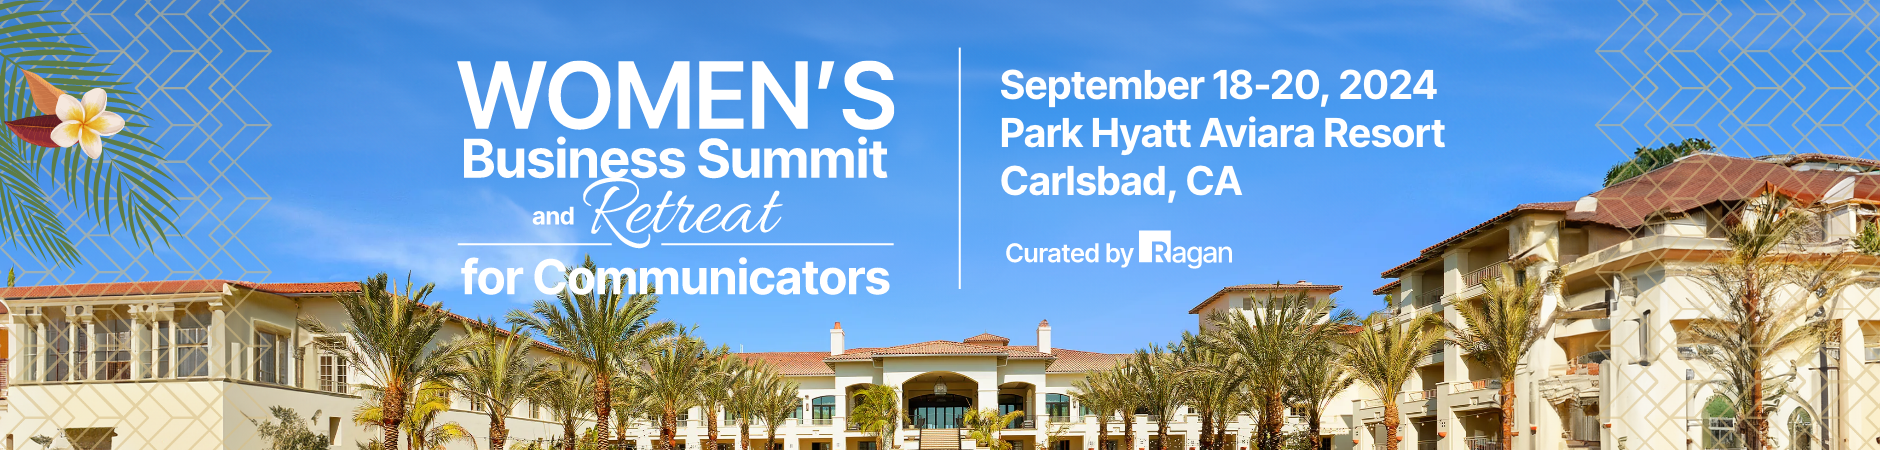 Women’s Business Summit & Retreat for Communicators 